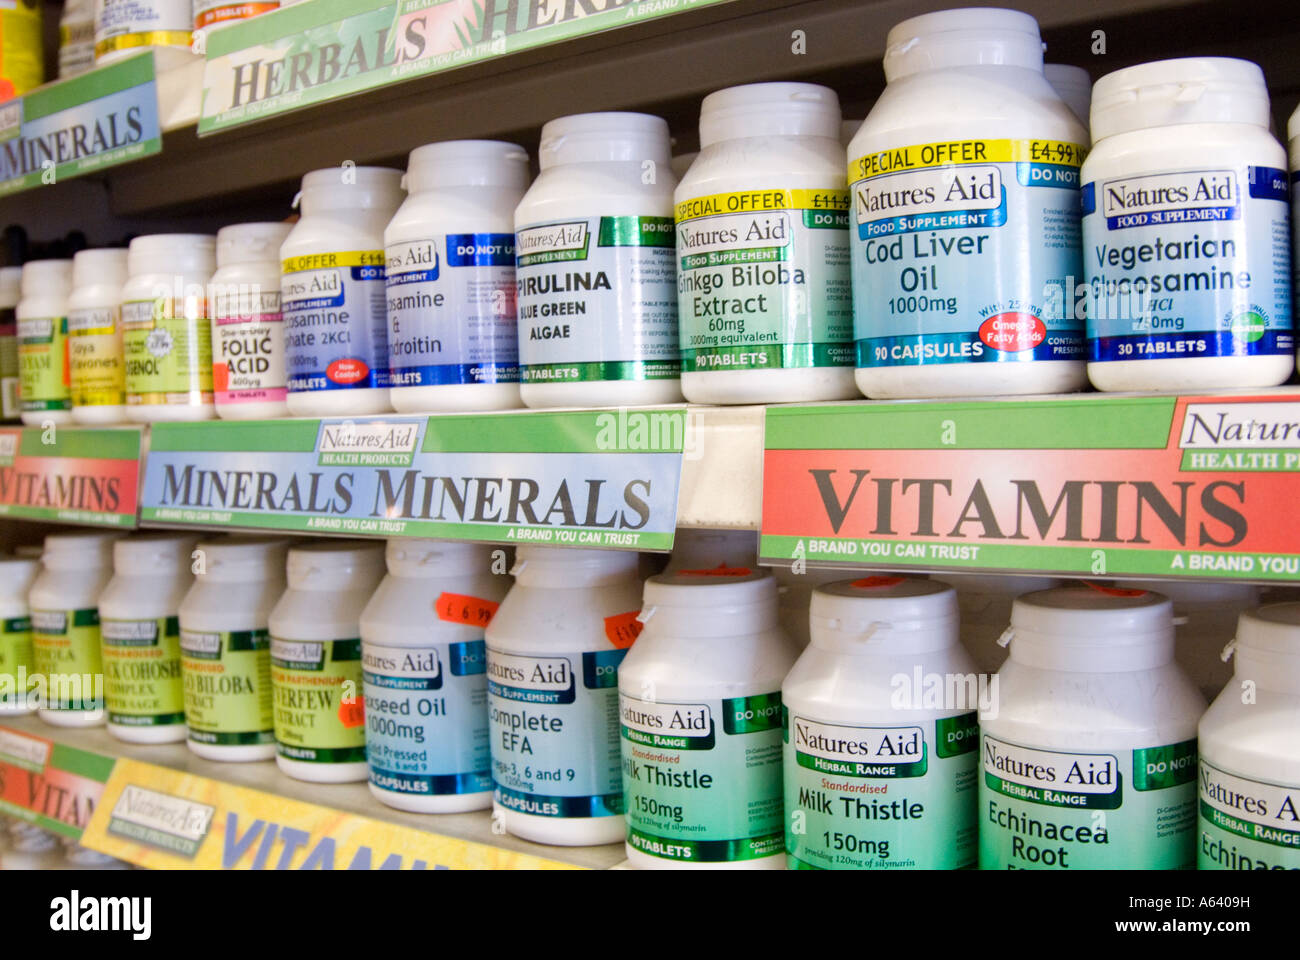 Vitamin and dietary supplement retailer